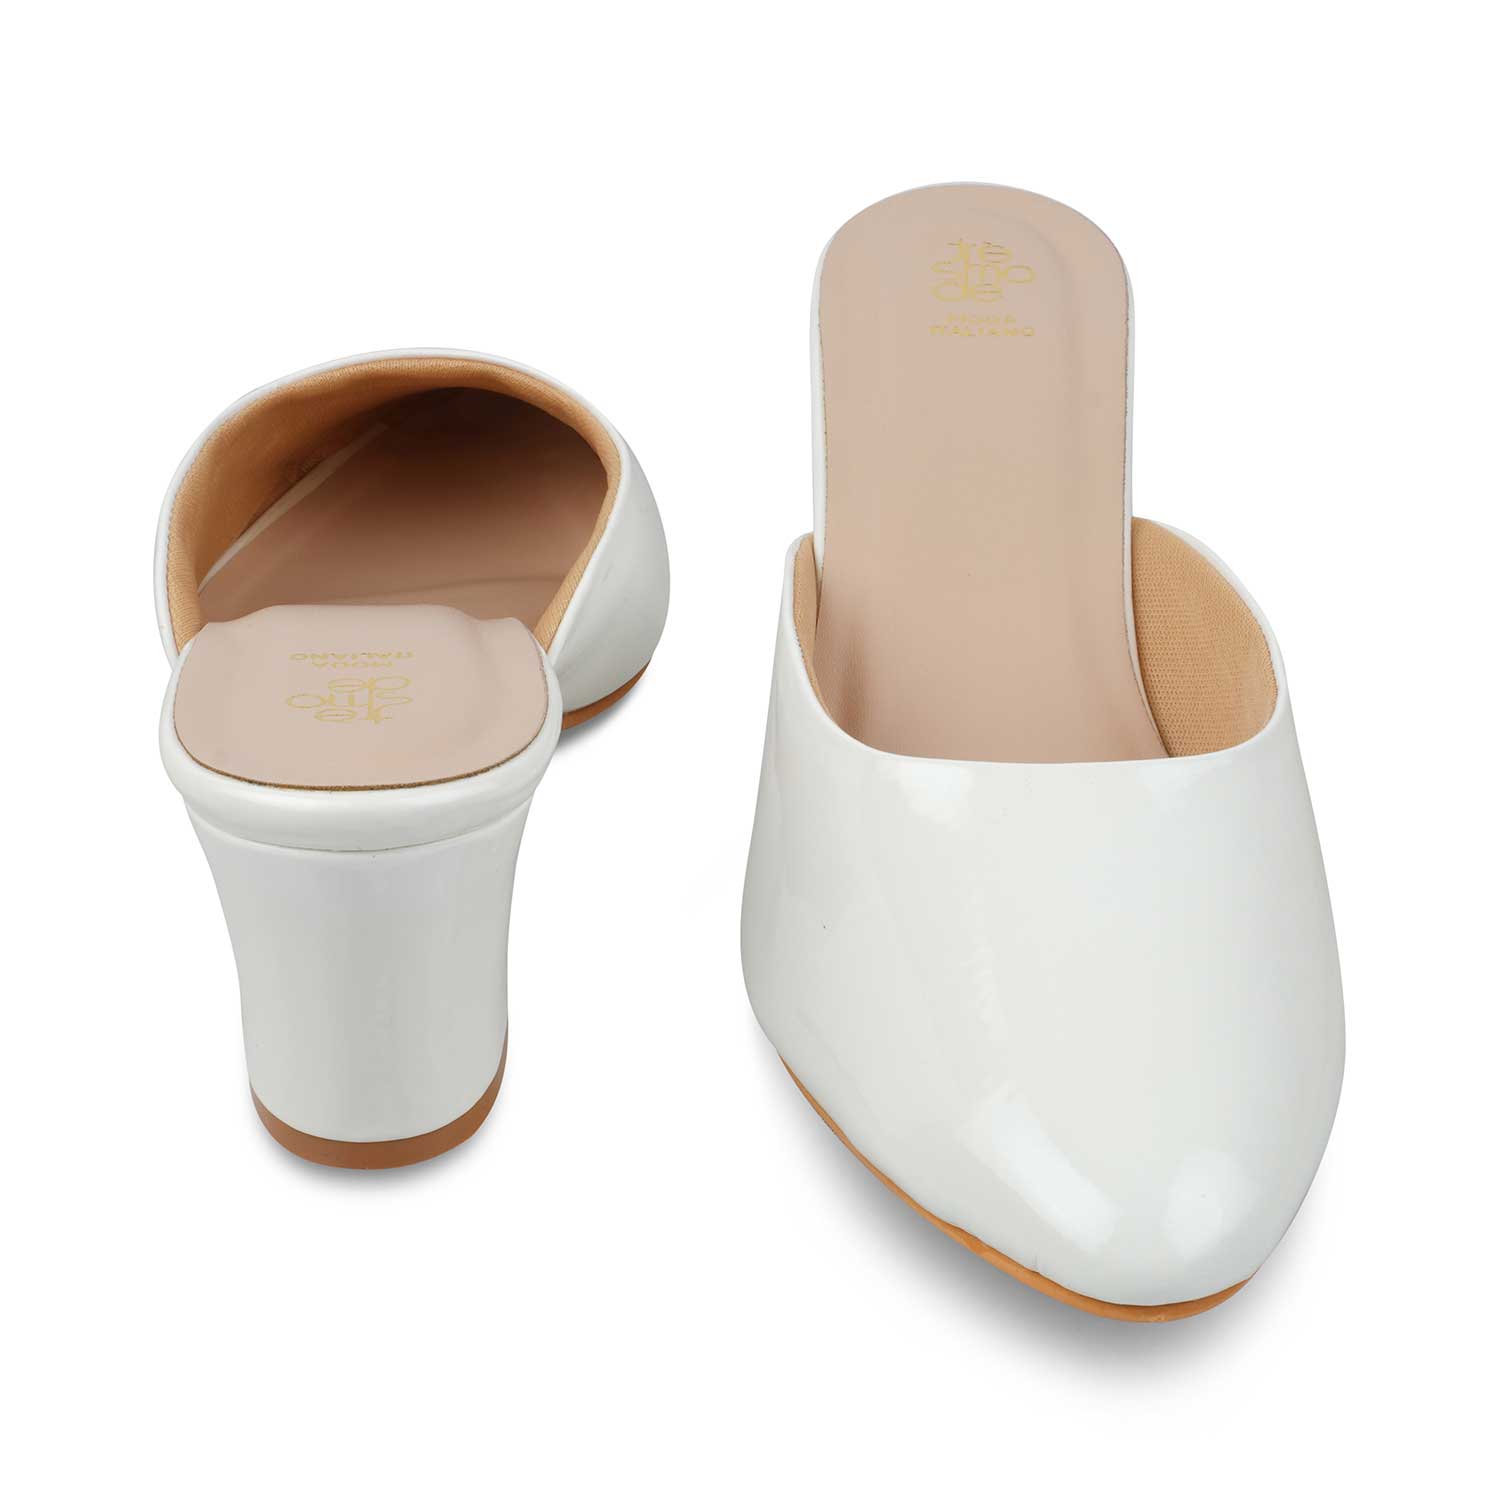 The Carbo White Women's Dress Block Heel Sandals Tresmode